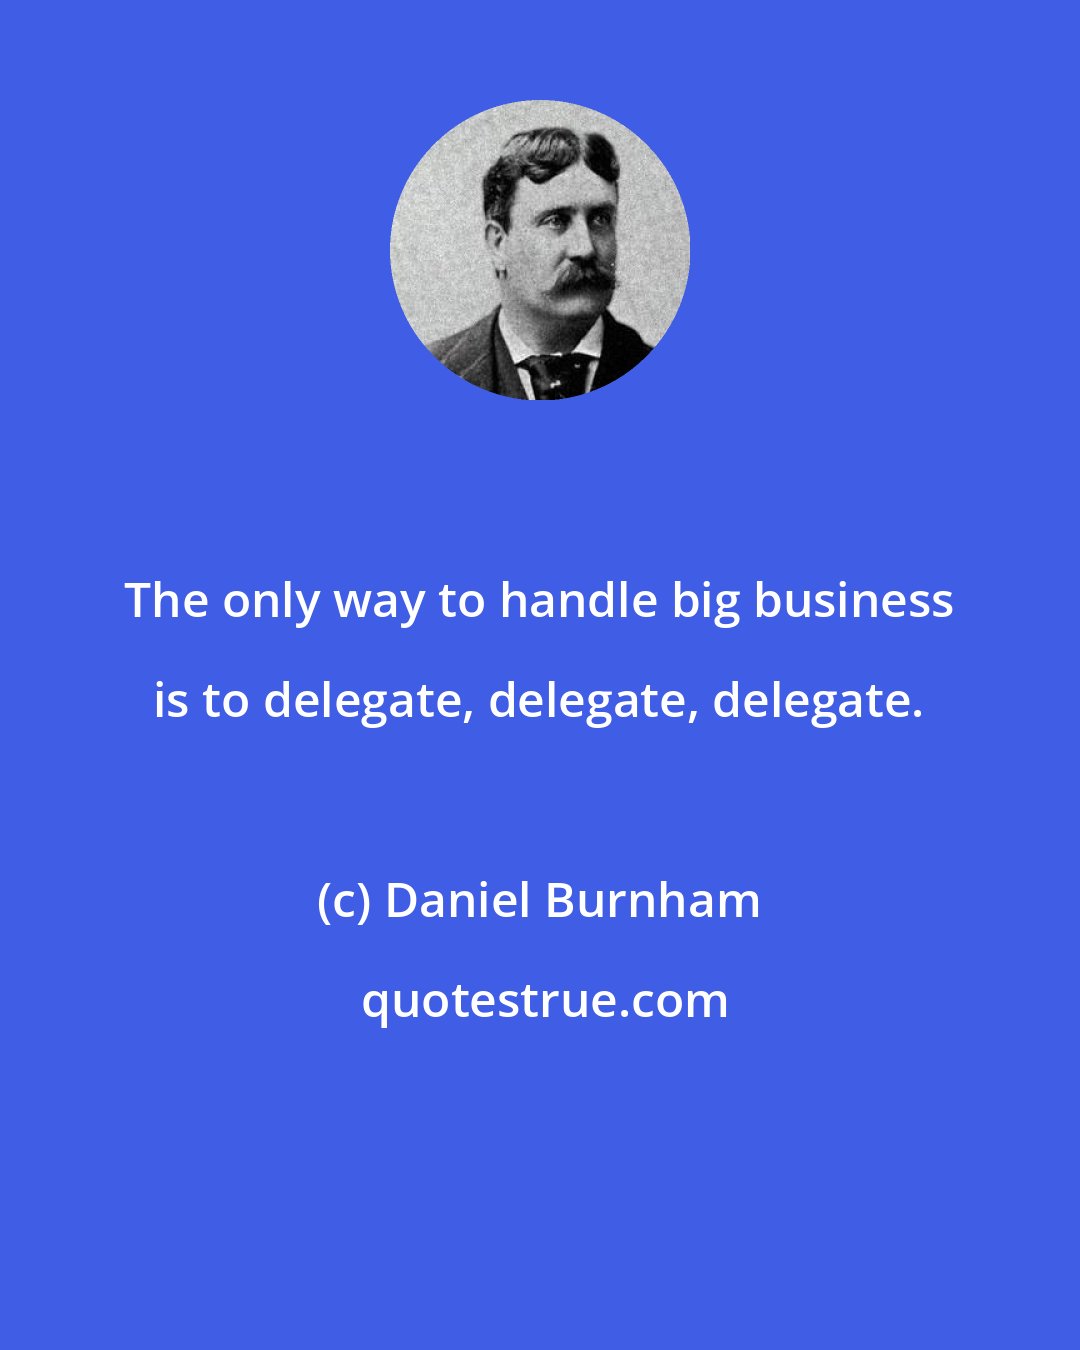 Daniel Burnham: The only way to handle big business is to delegate, delegate, delegate.